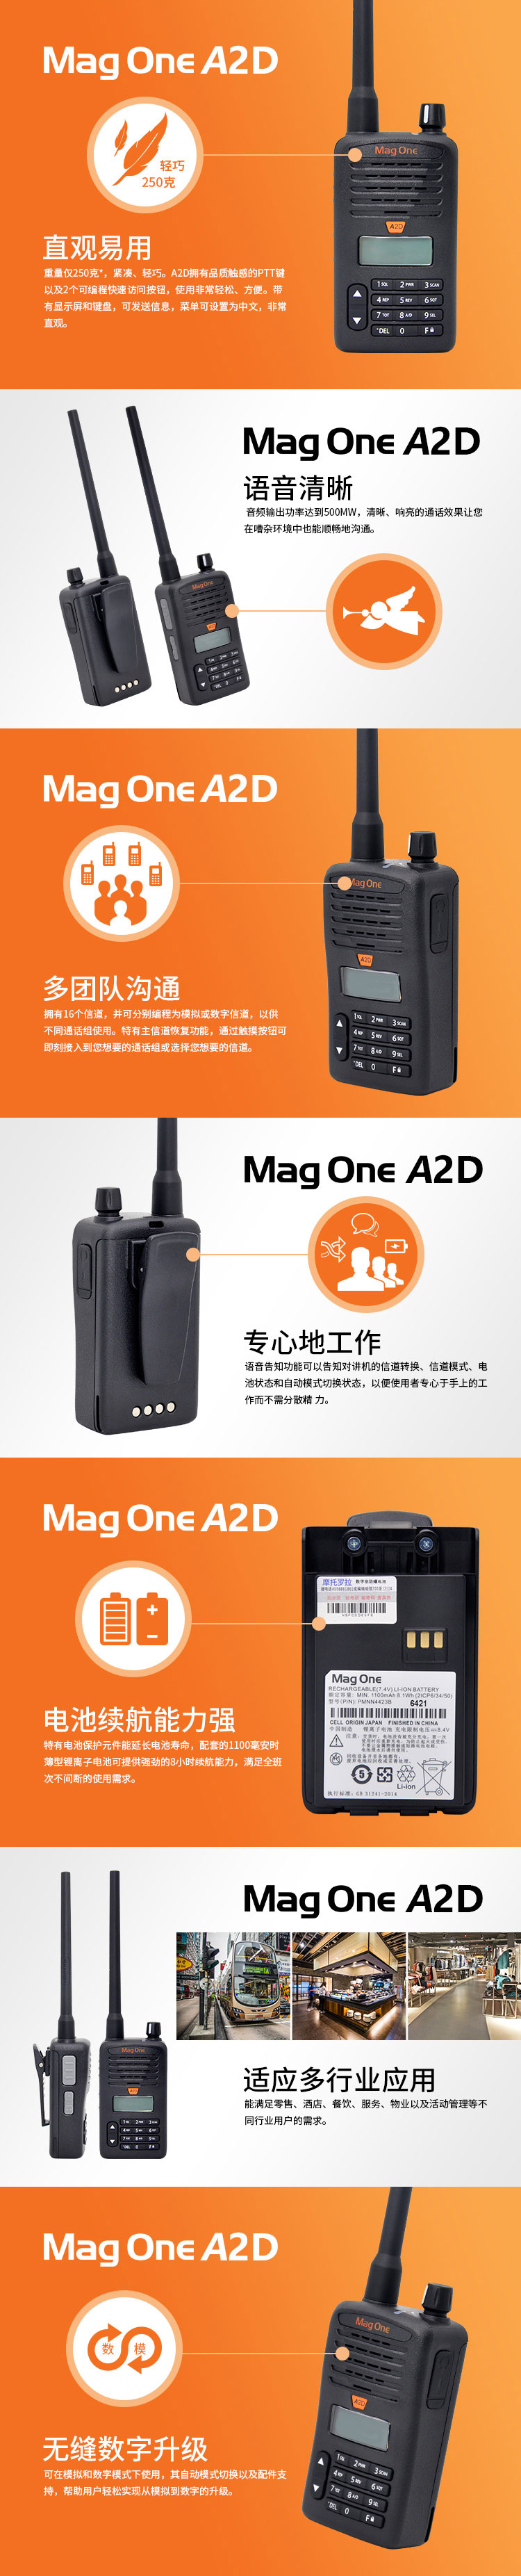 Mag One A2D数字商用手持无线对讲机